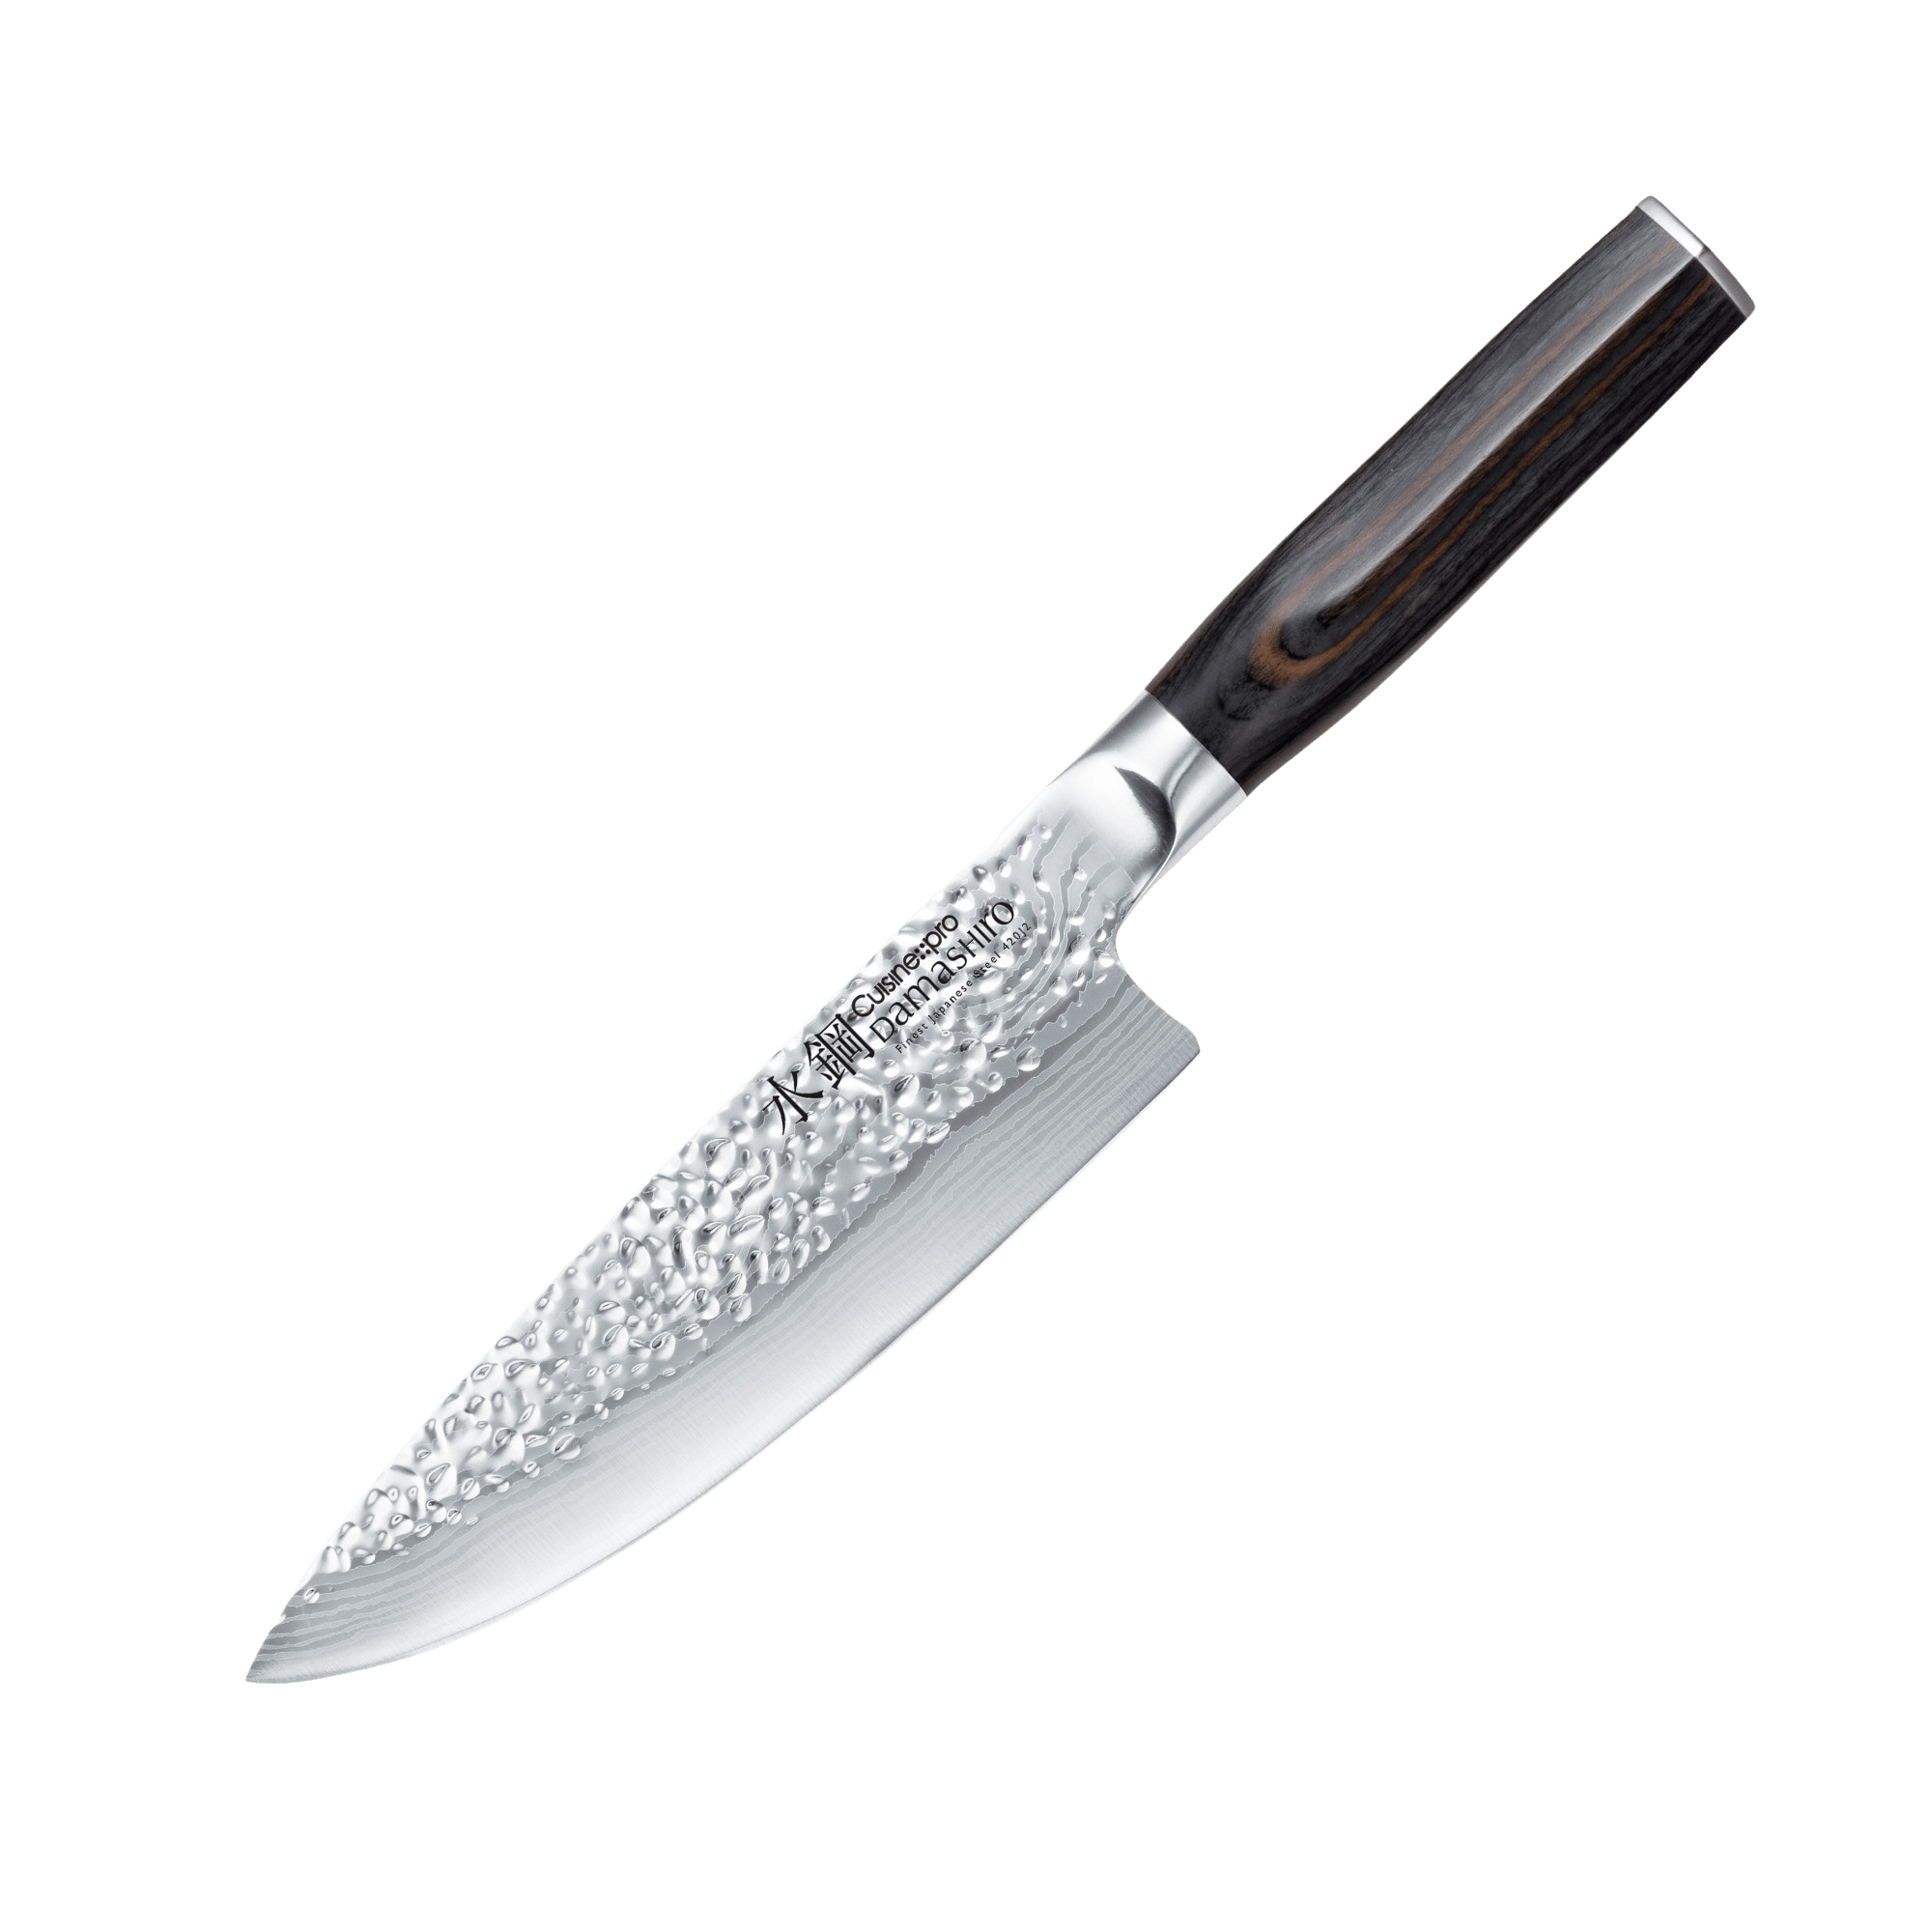 Cuisine::pro® Damashiro® Emperor Chefs Knife 15cm/6 – Cuisine